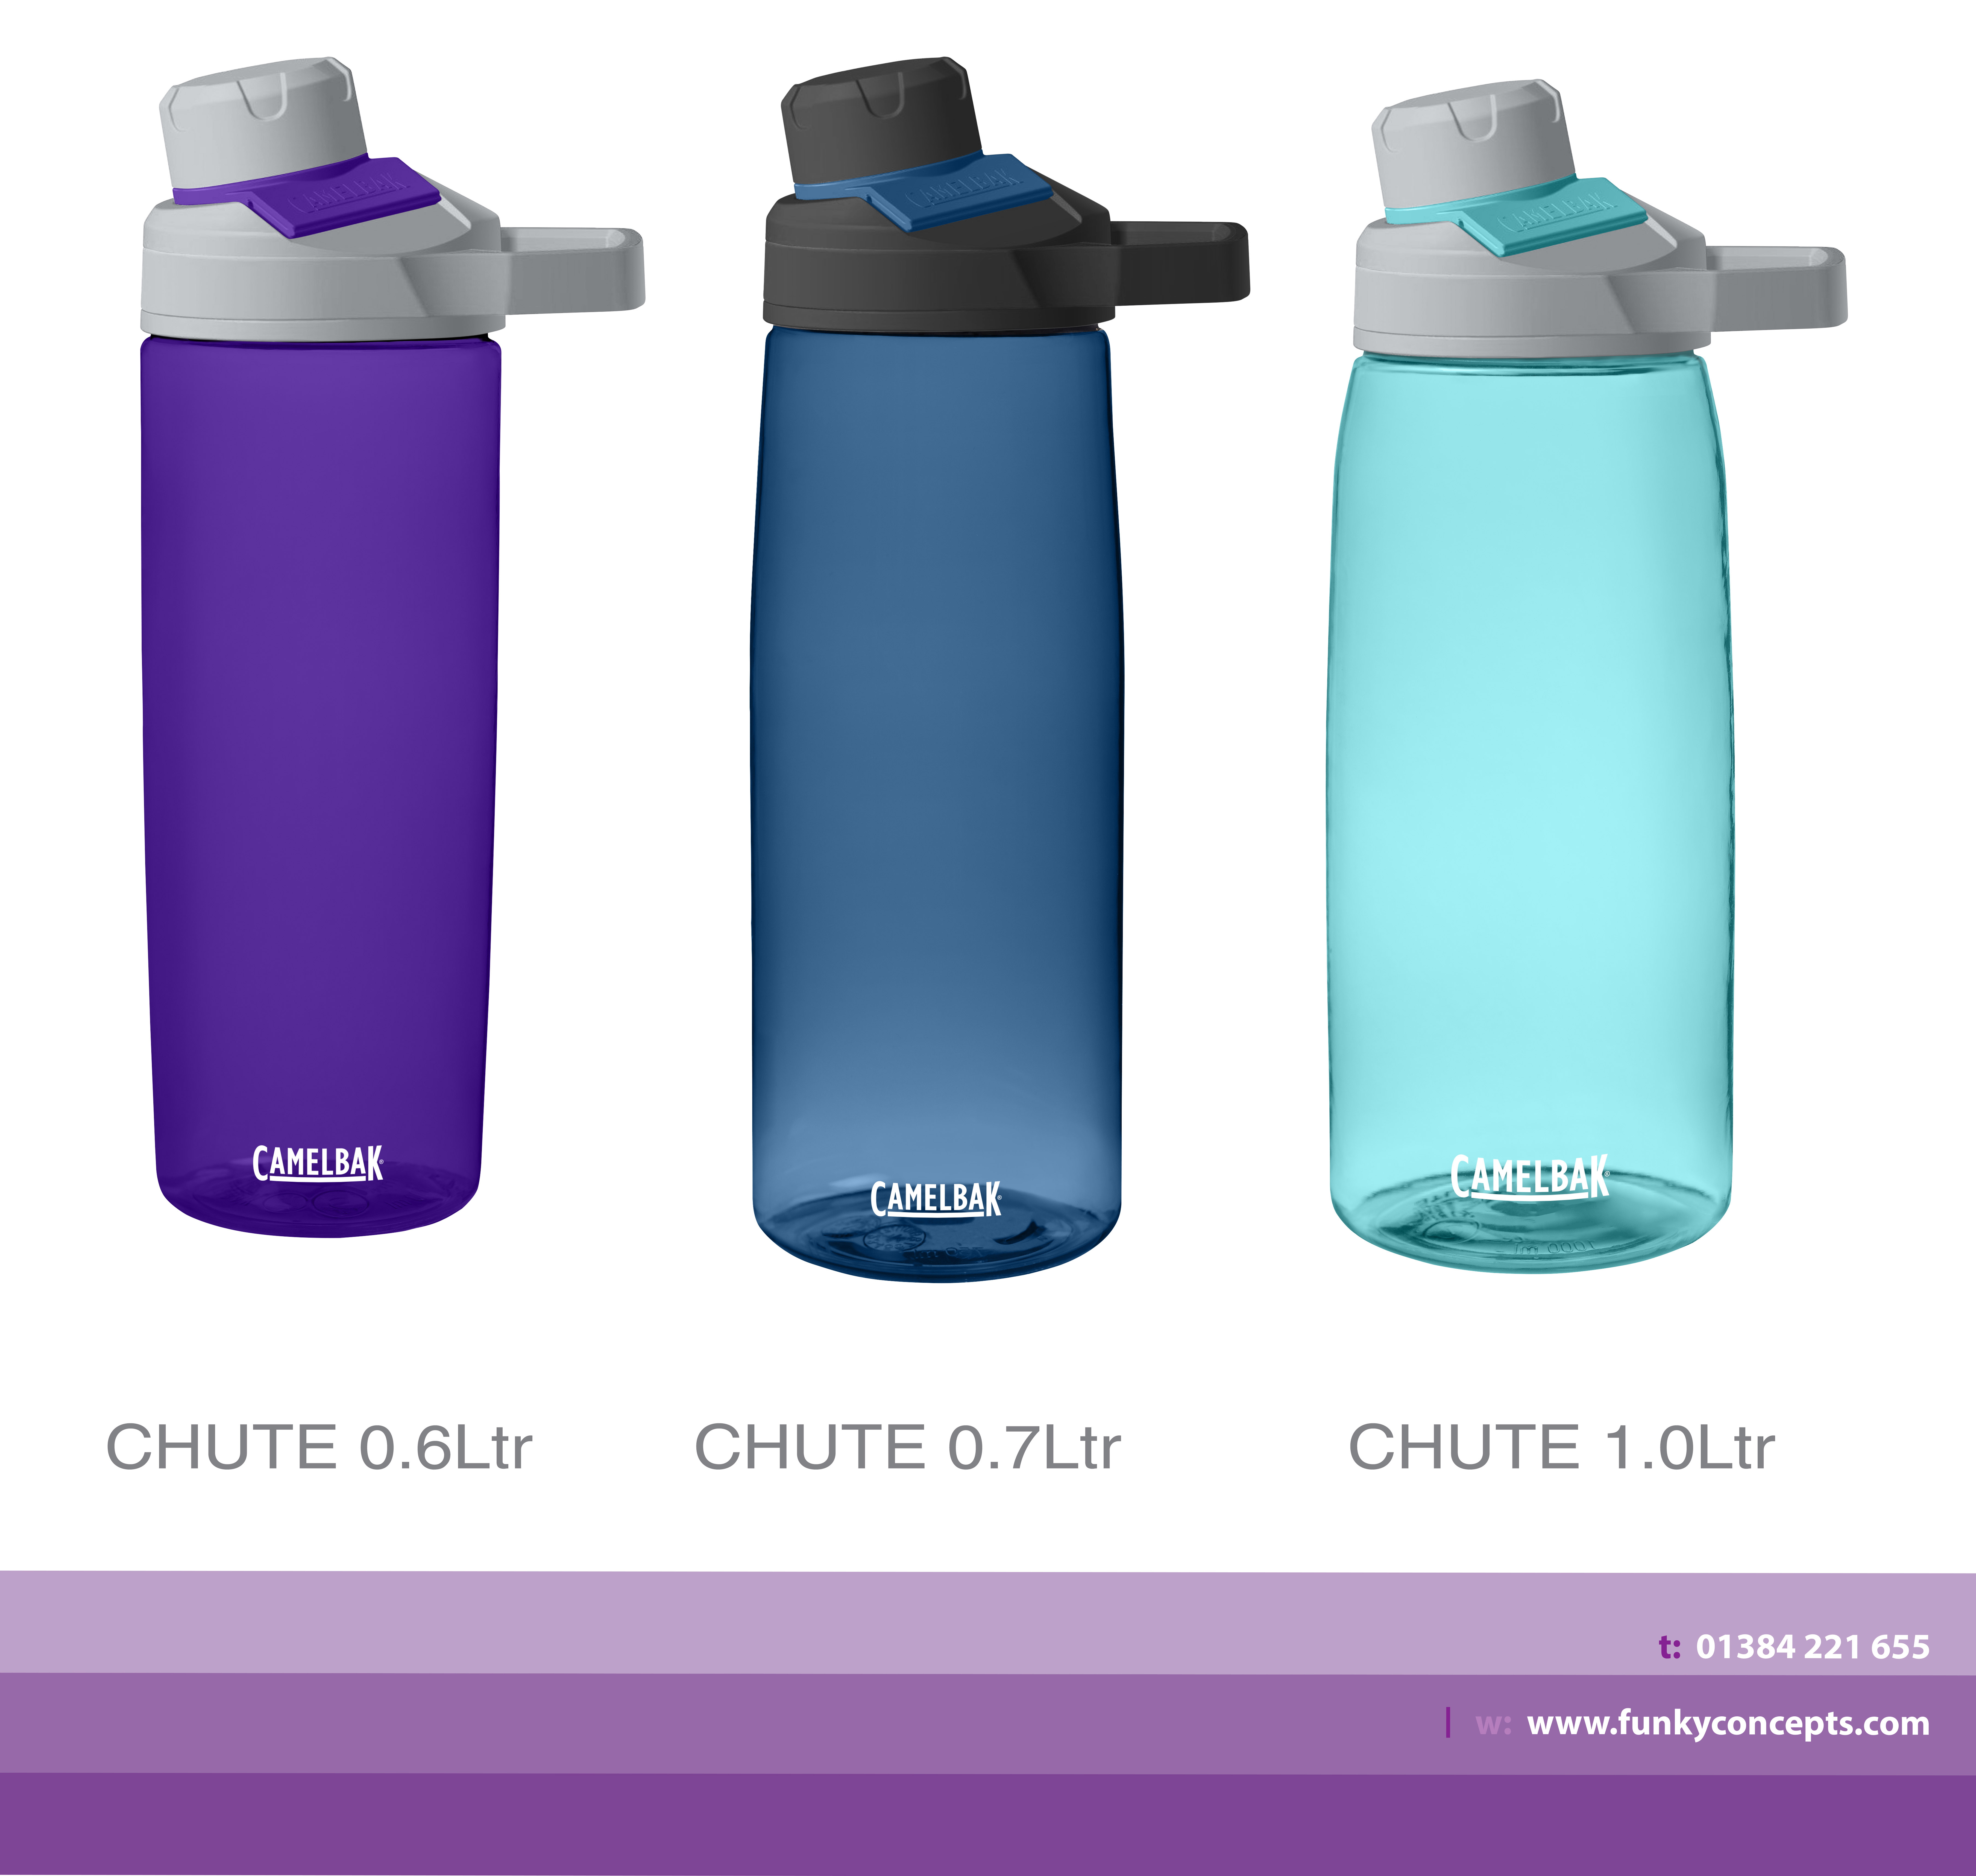 Promotional CamelBak Chute 0.6L Bottle